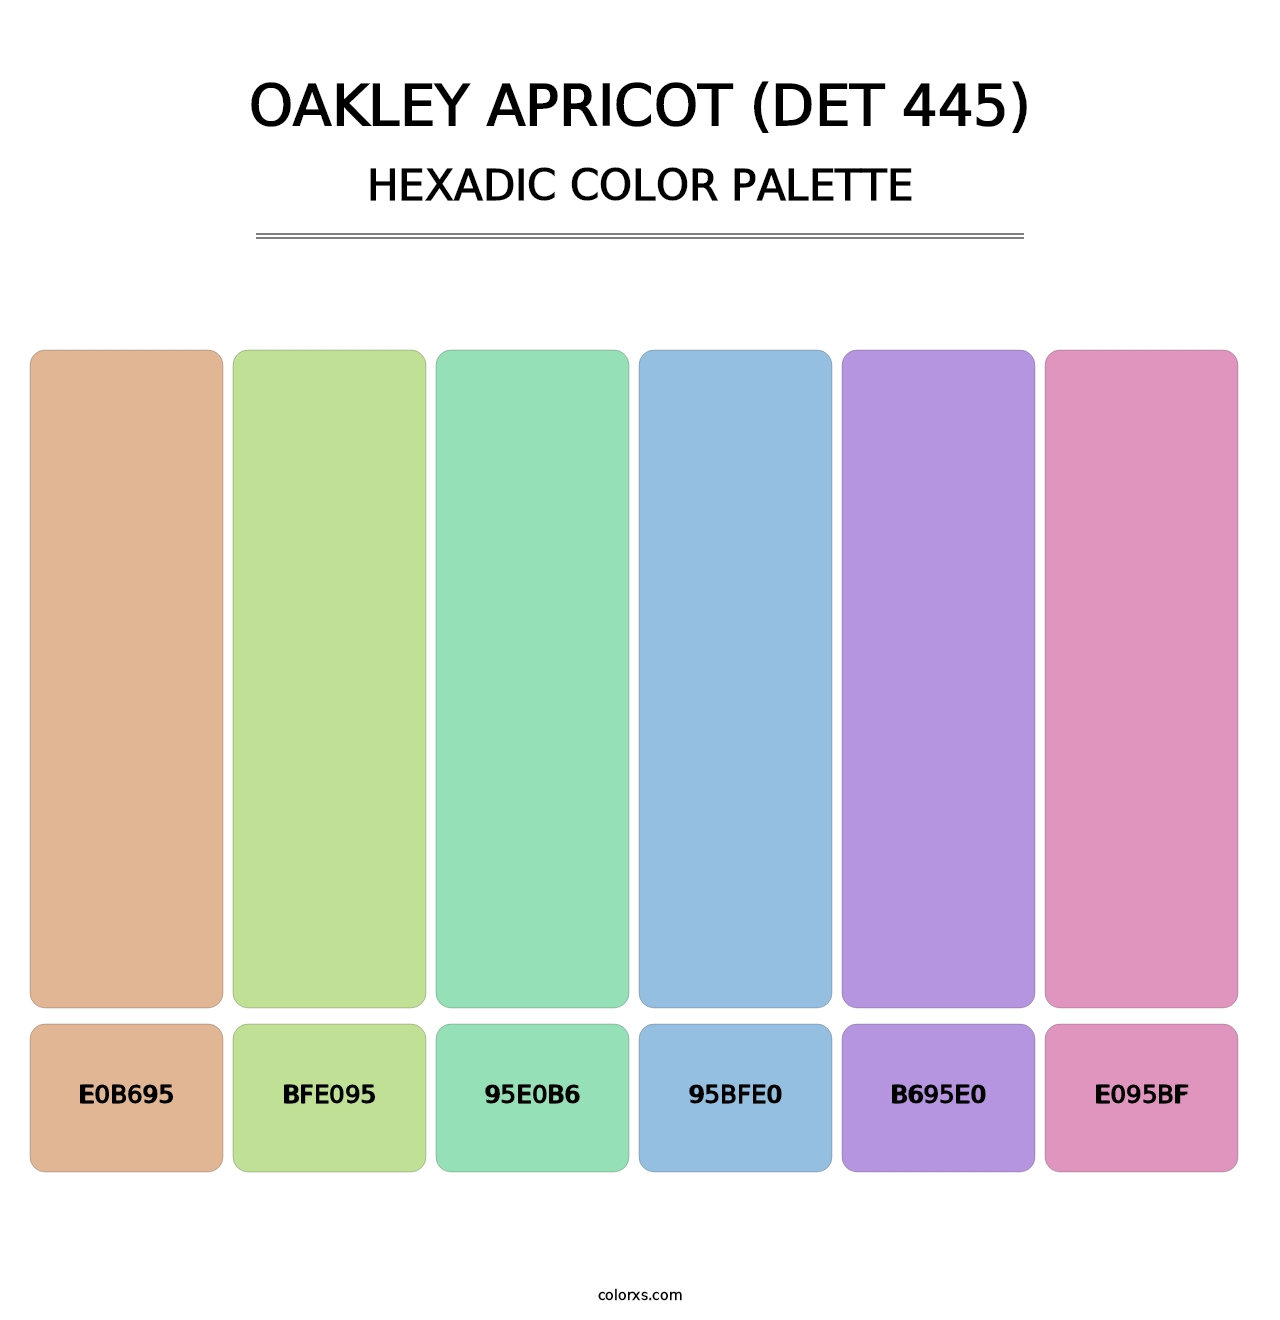 Oakley Apricot (DET 445) - Hexadic Color Palette